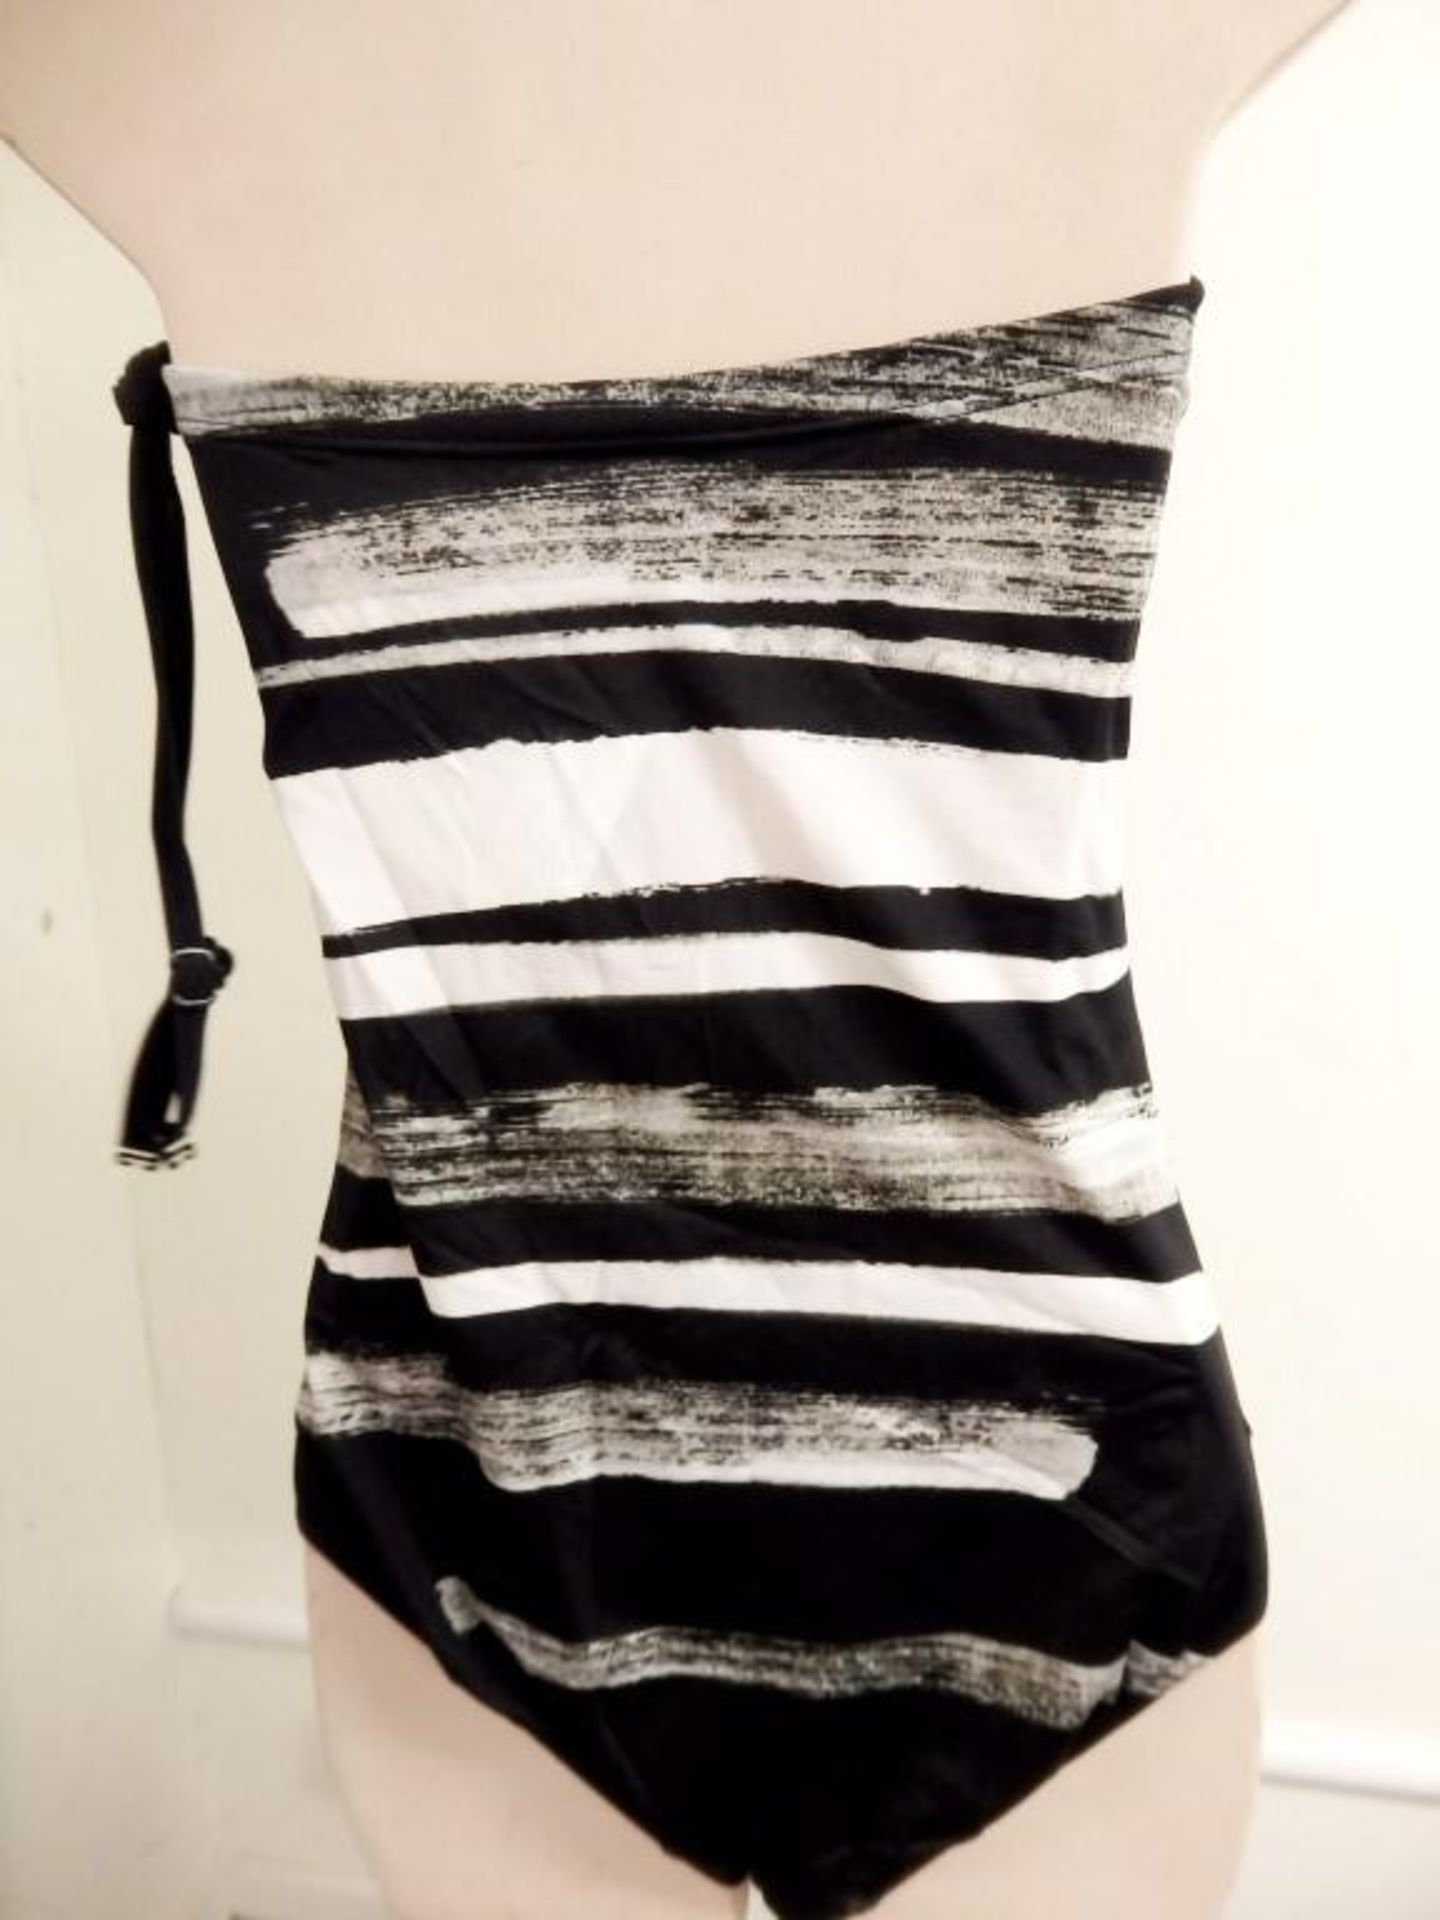 1 x Rasurel - Black/Ecru and vibrant patternedbustier - Cuba Swimsuit - R20738 - Size 2C - UK 32 - - Image 2 of 7